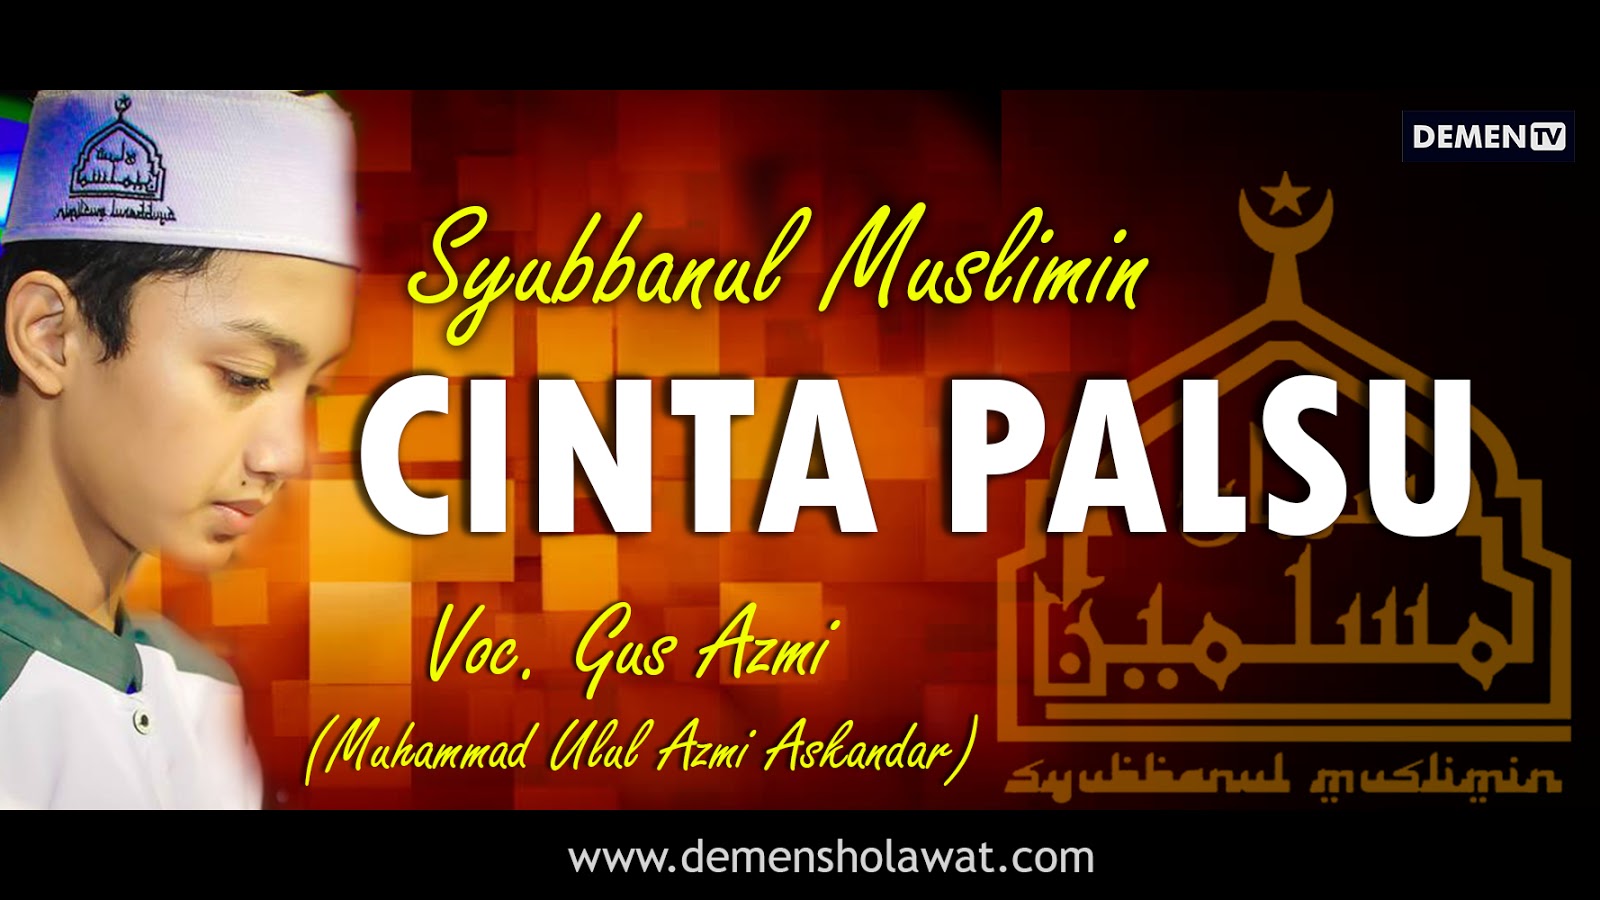 Lirik Cinta Palsu Syubbanul Muslimin Vokal Gus Azmi Download